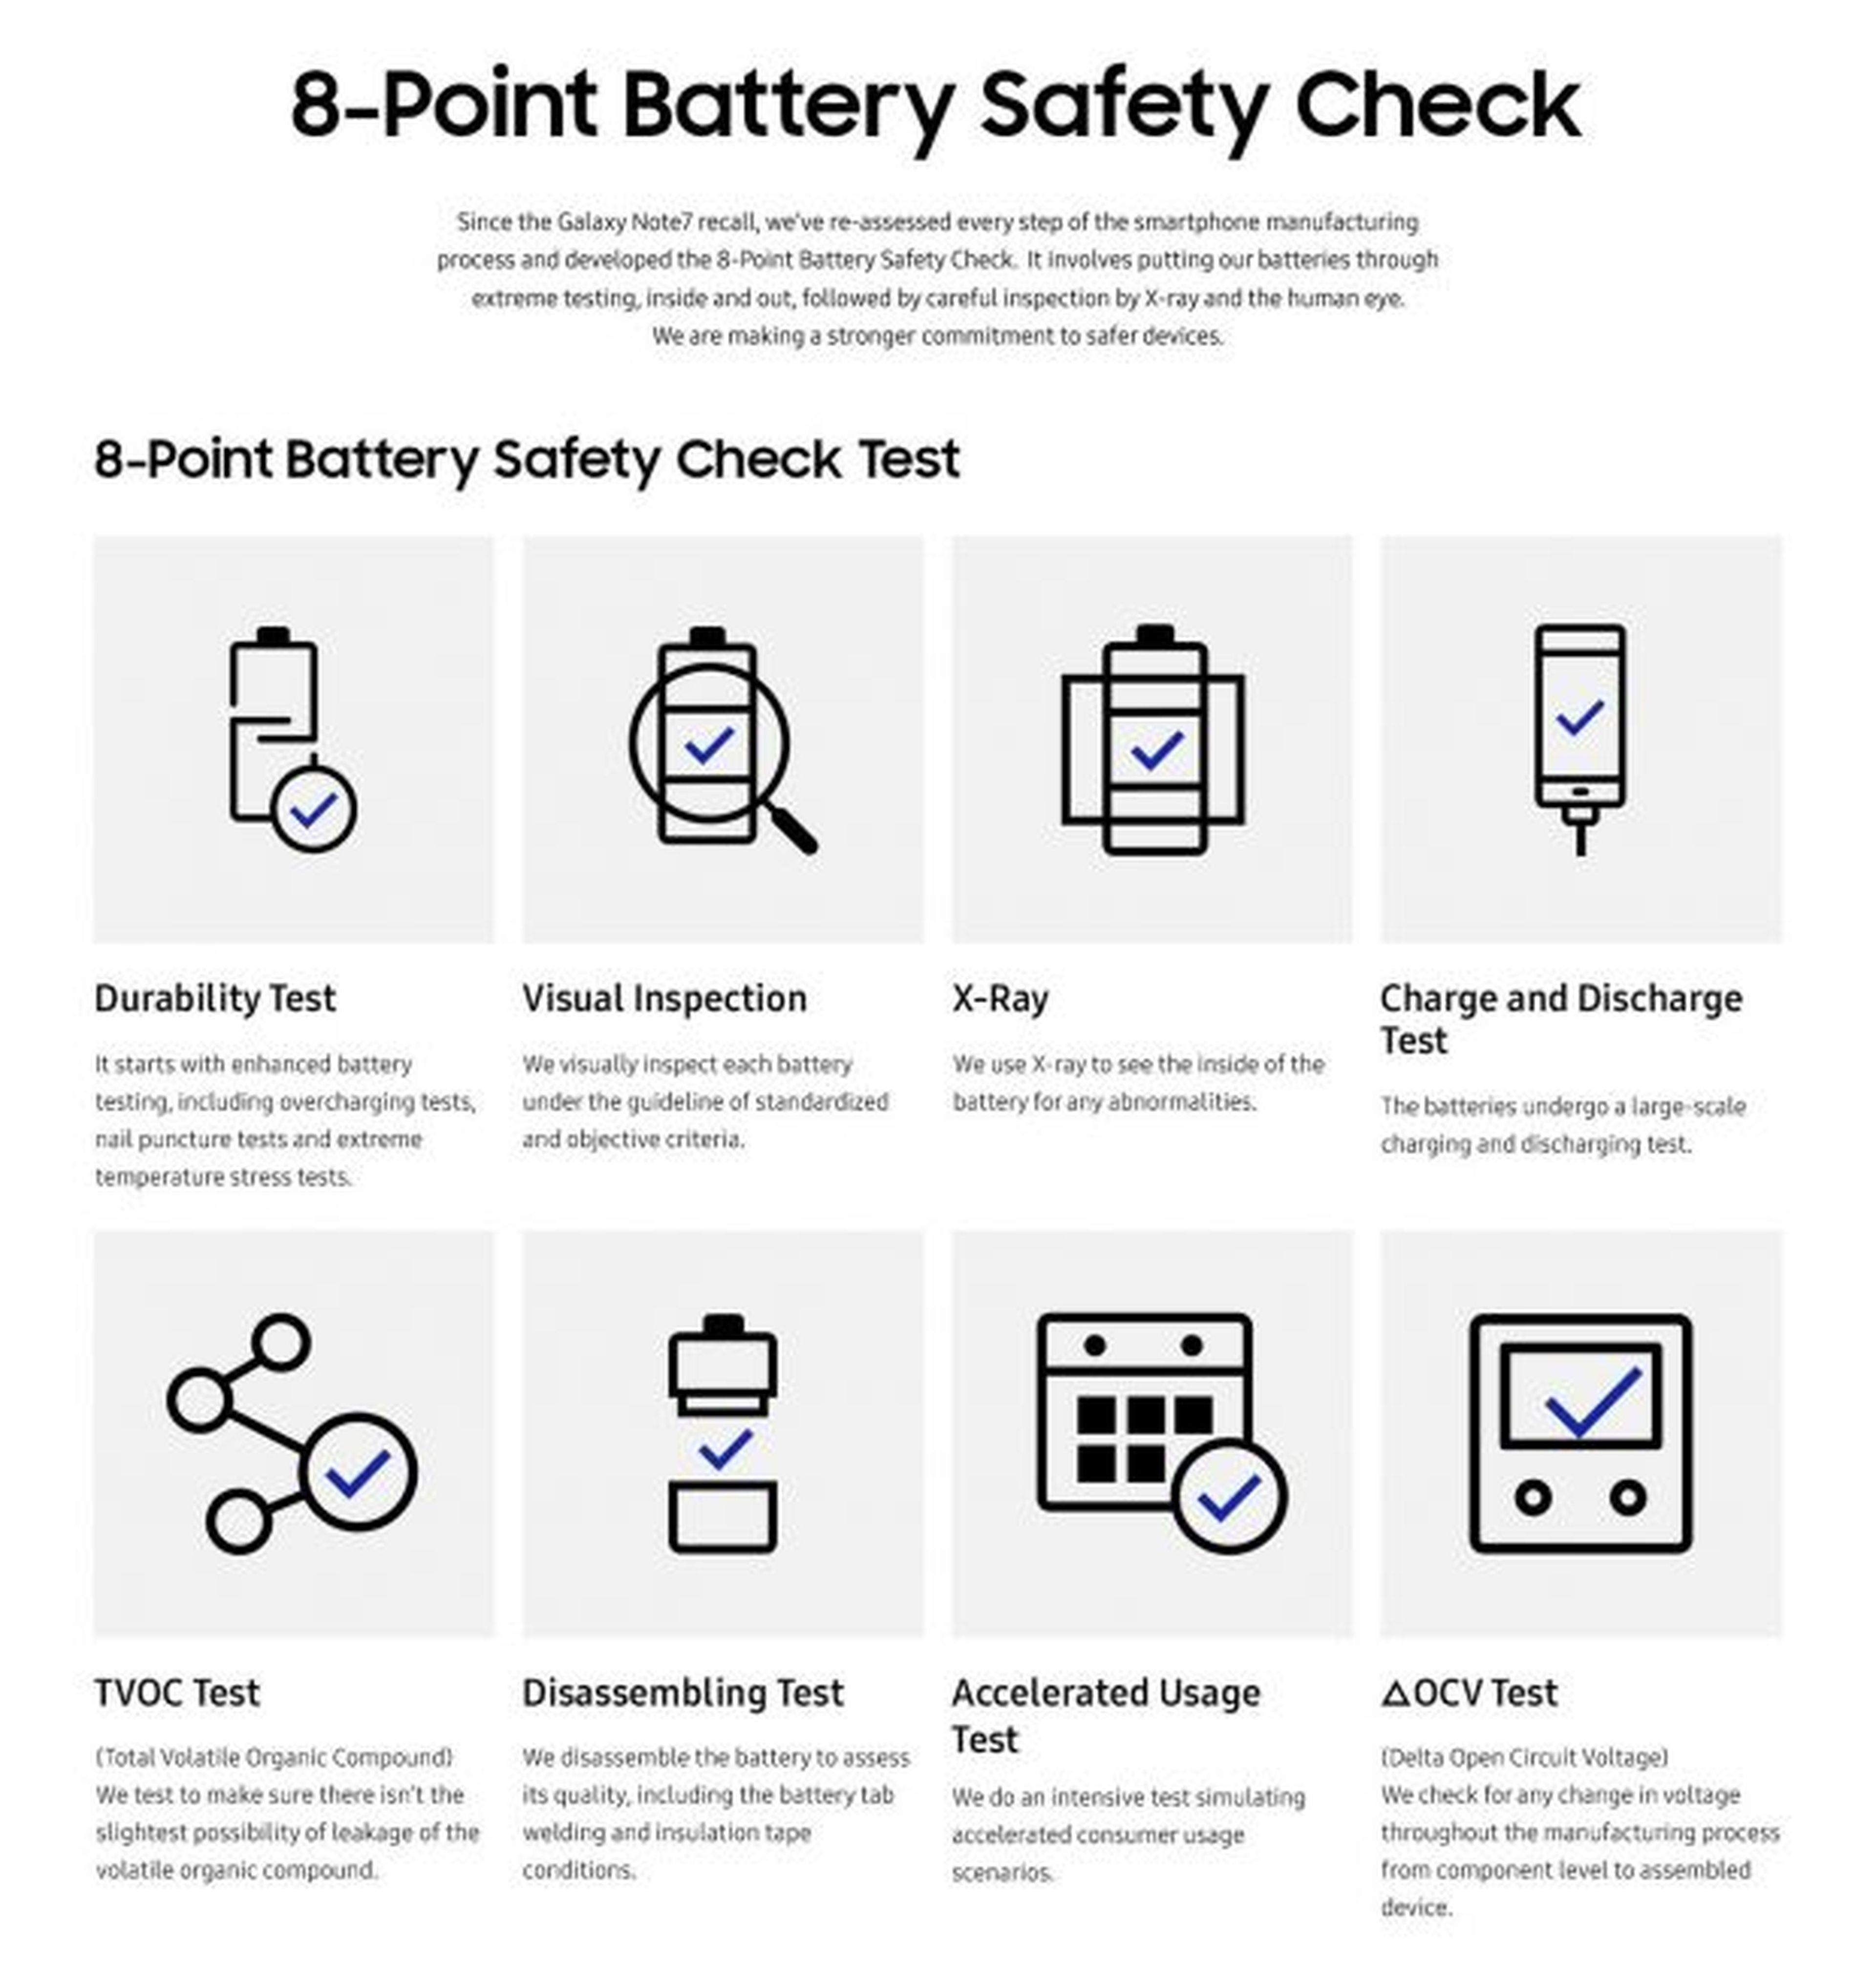 programa seguridad baterías samsung